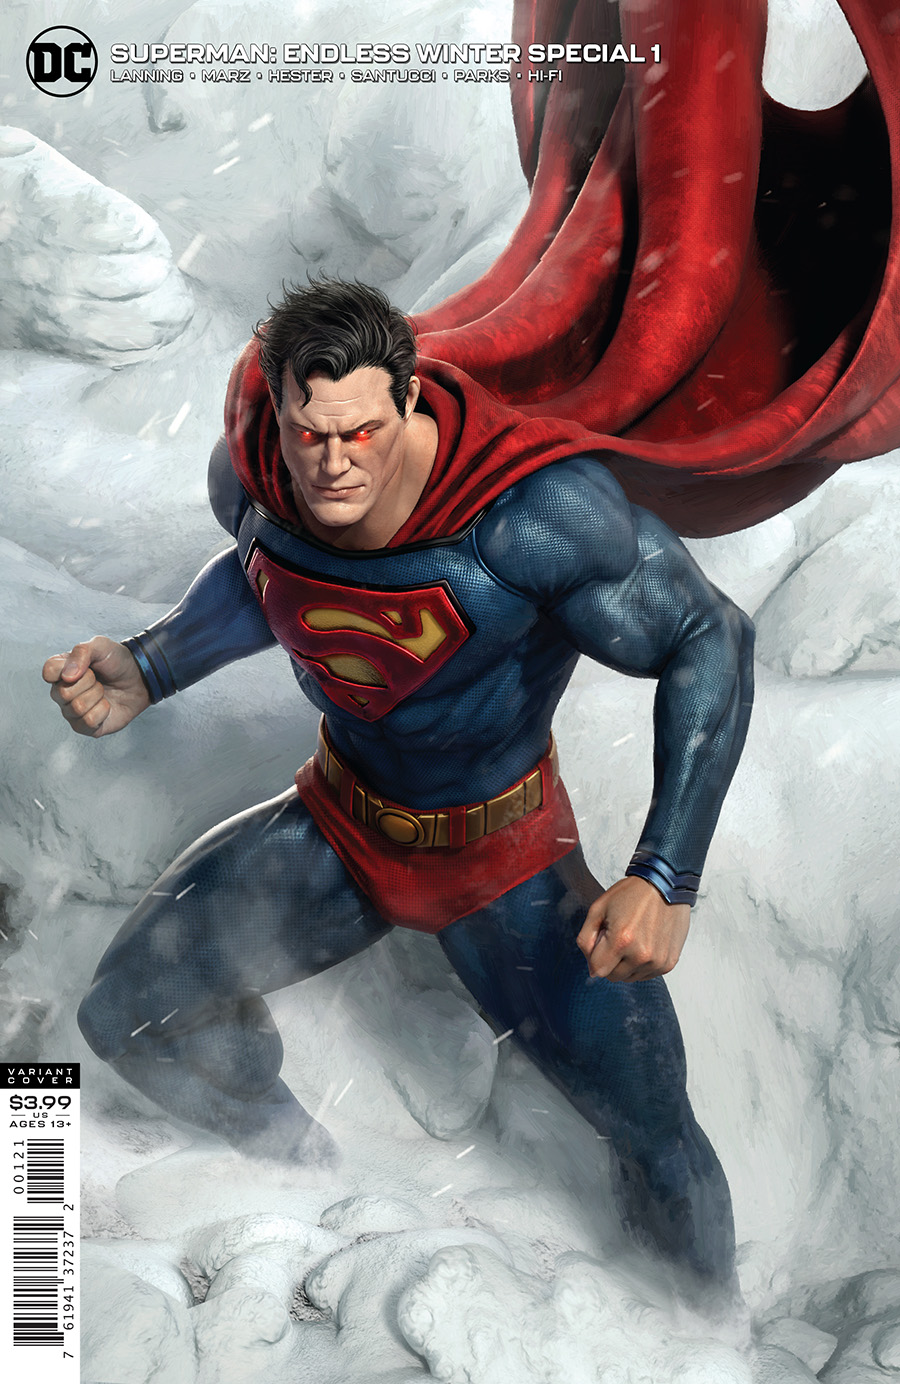 Superman: Endless Winter Special #1 - The Aspiring Kryptonian